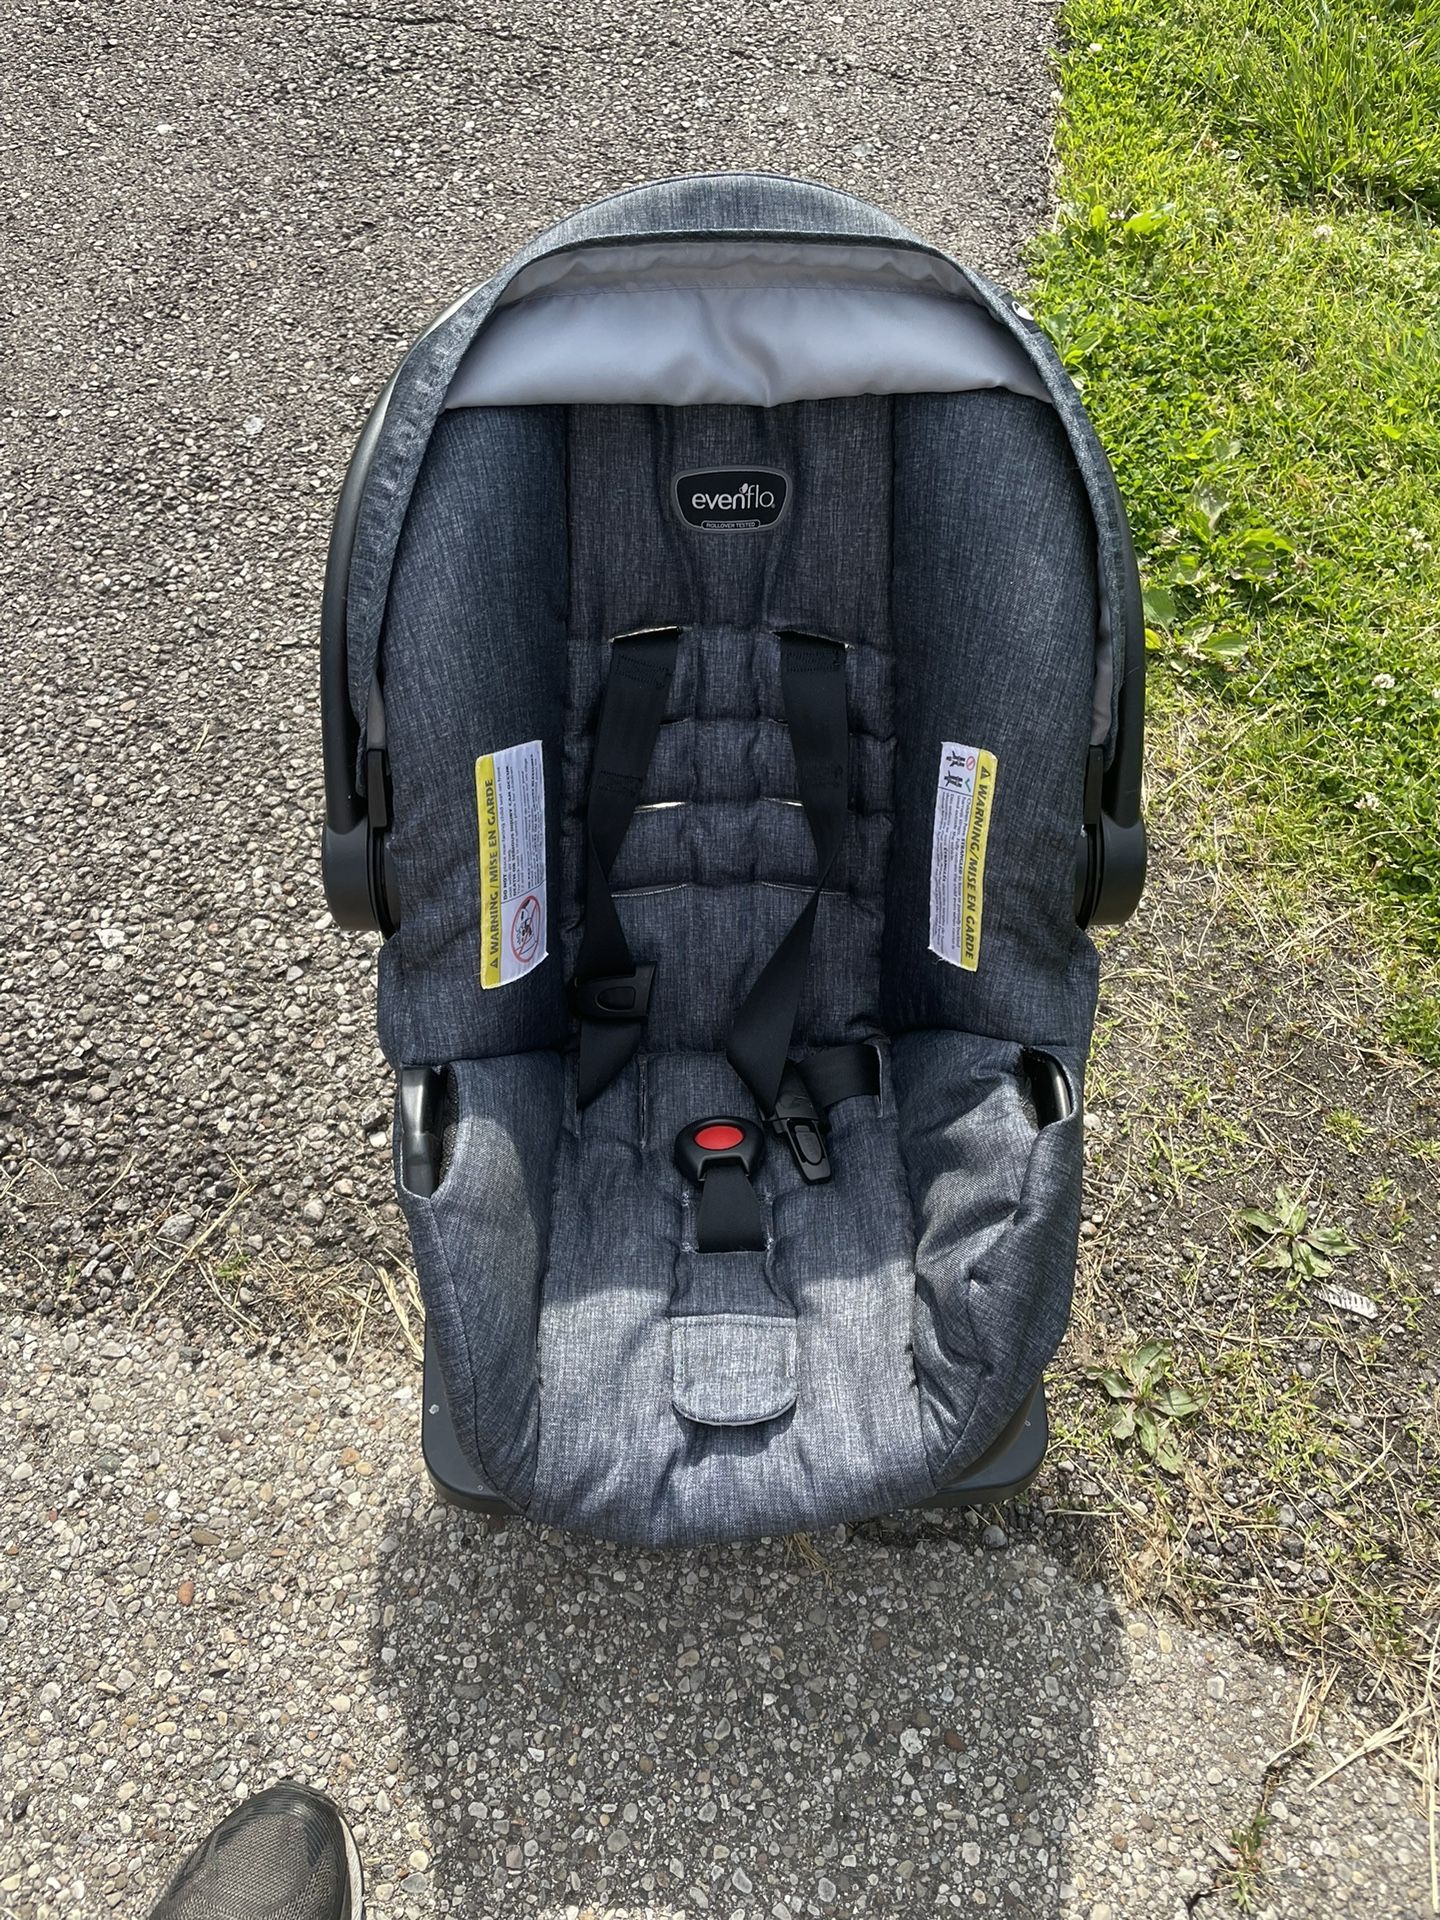 EvenFlo Baby Car Seat 